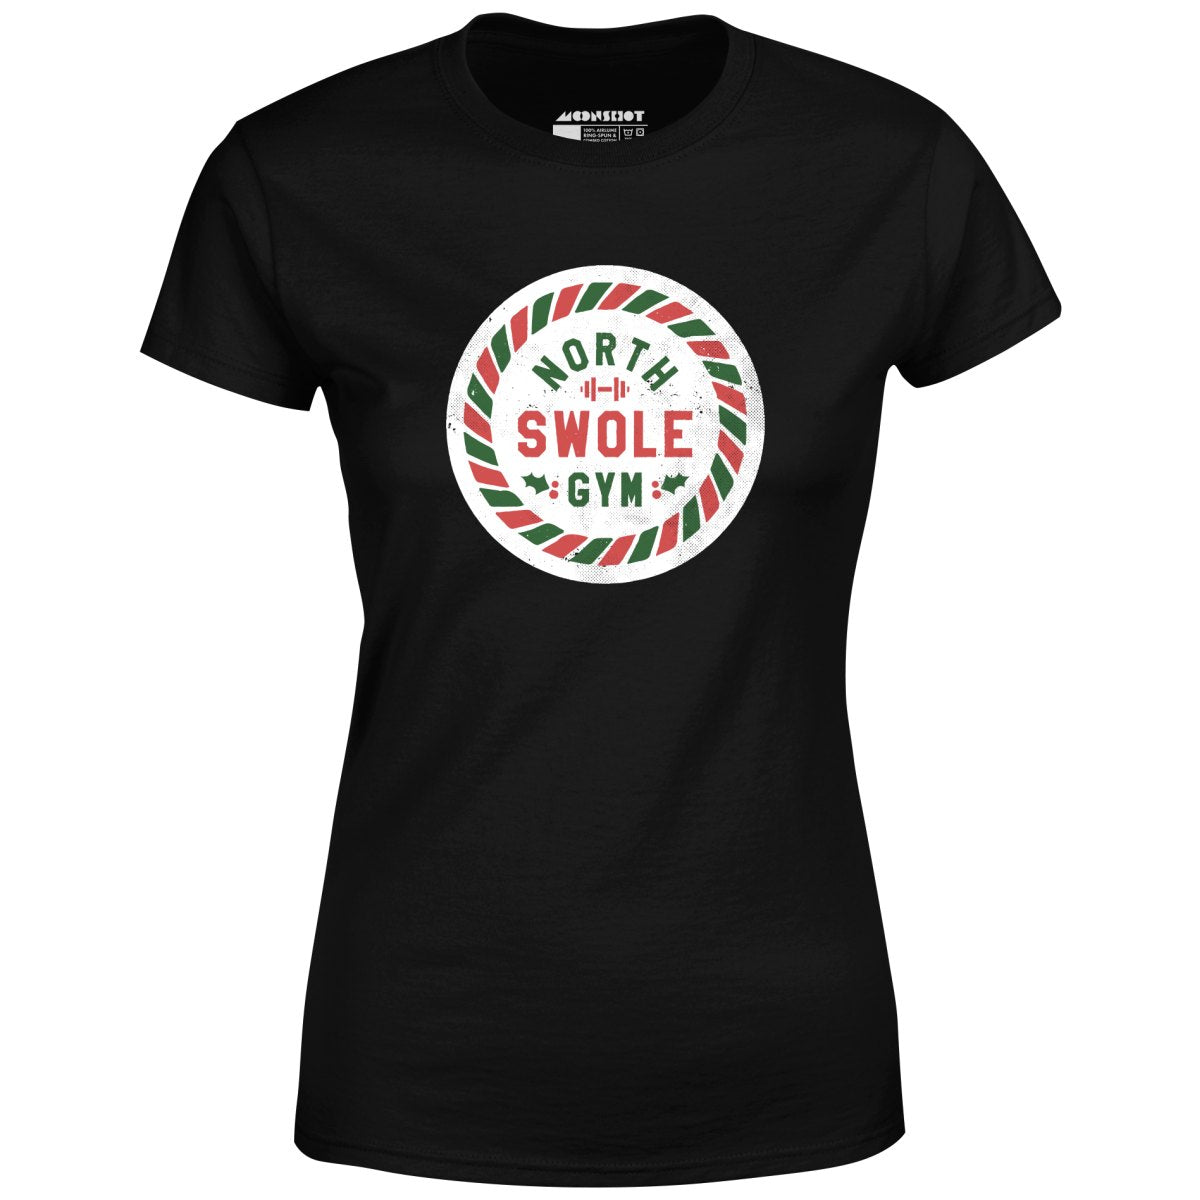 North Swole Gym - Women's T-Shirt